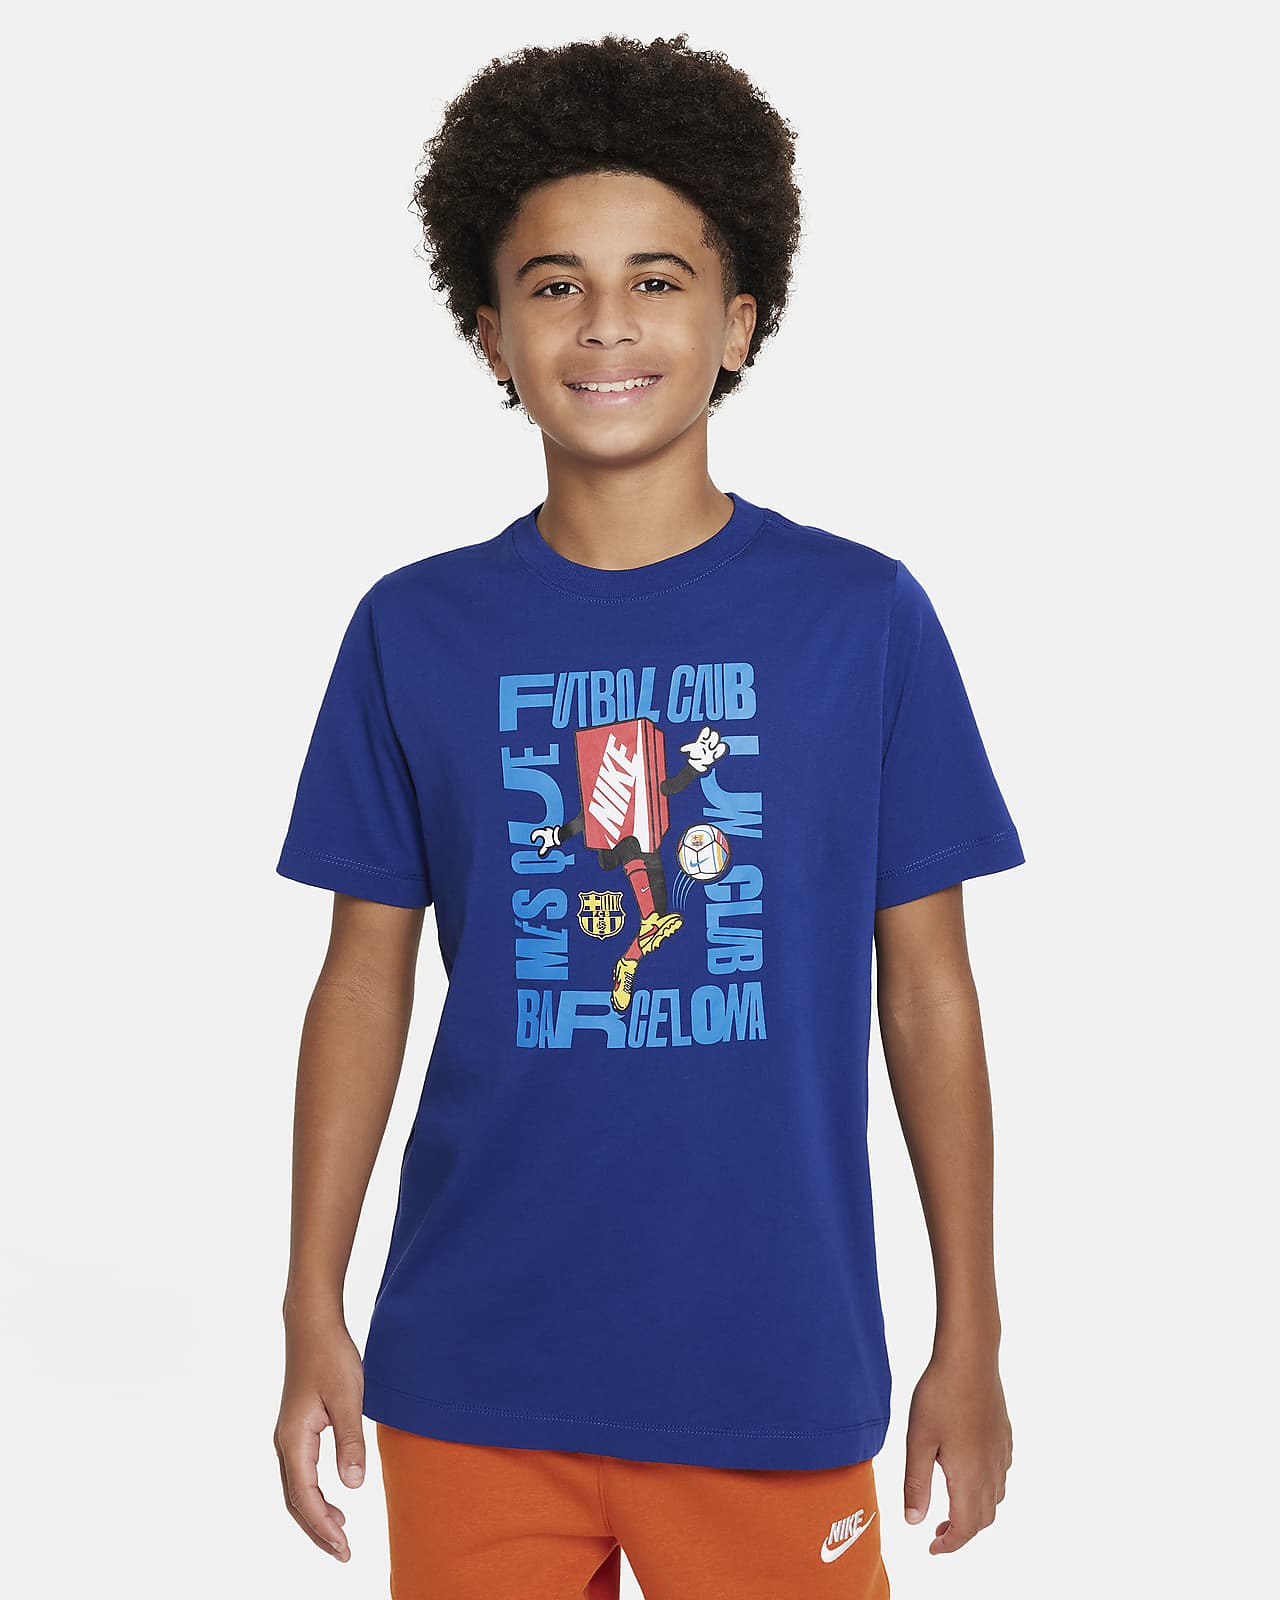 FC Barcelona Nike Voetbalshirt voor kids